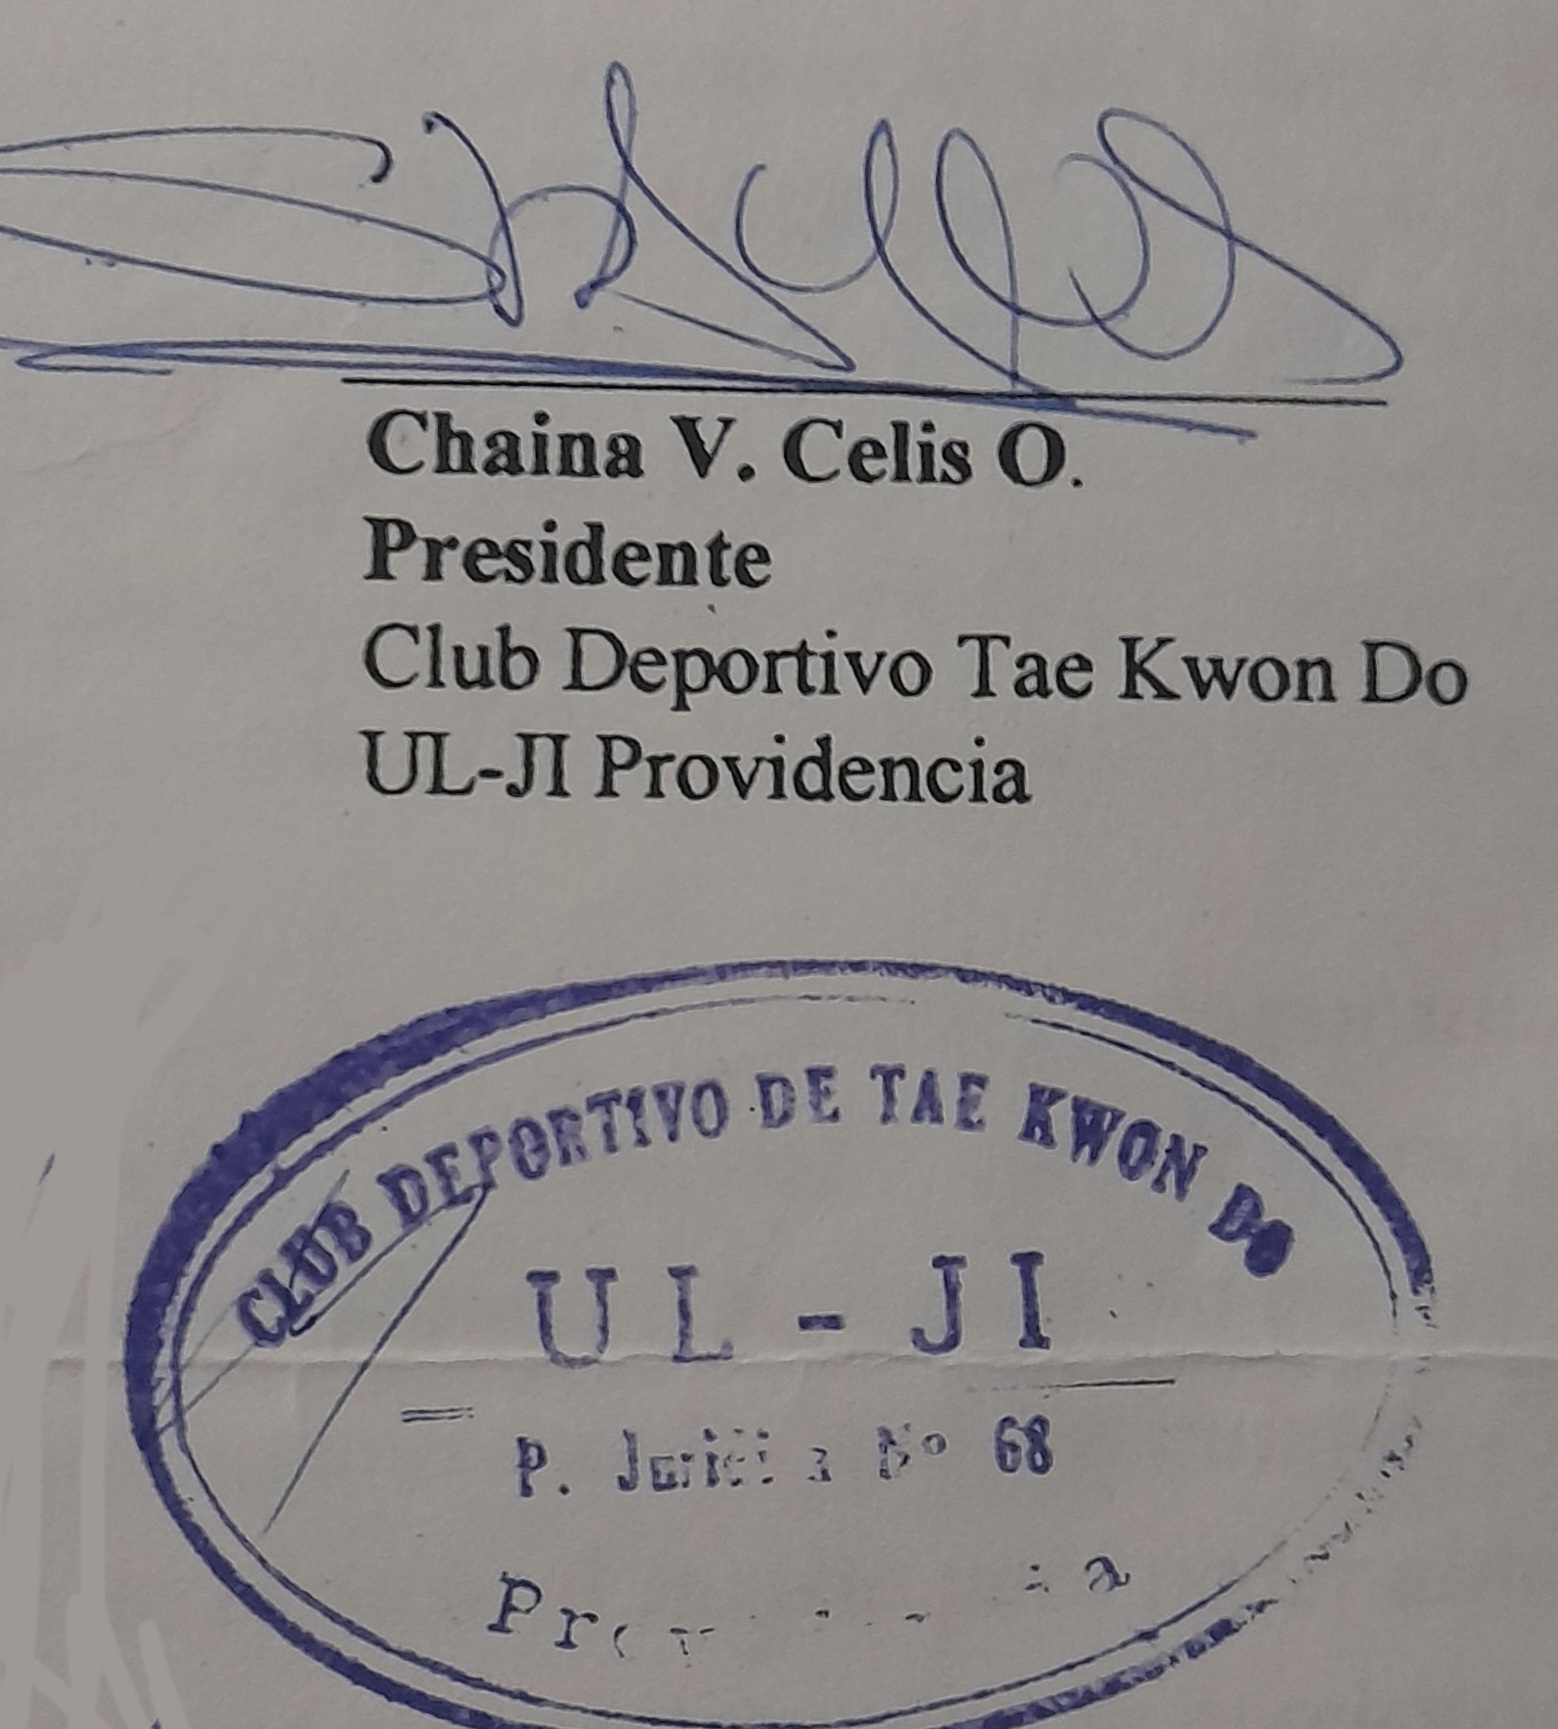 Chaina V, Celis 0.
Presidente

Club Deportivo Tae Kwon Do
UL-JI Providencia

1 Juan

oi P. Jurict 3 be 68
Pr, i :